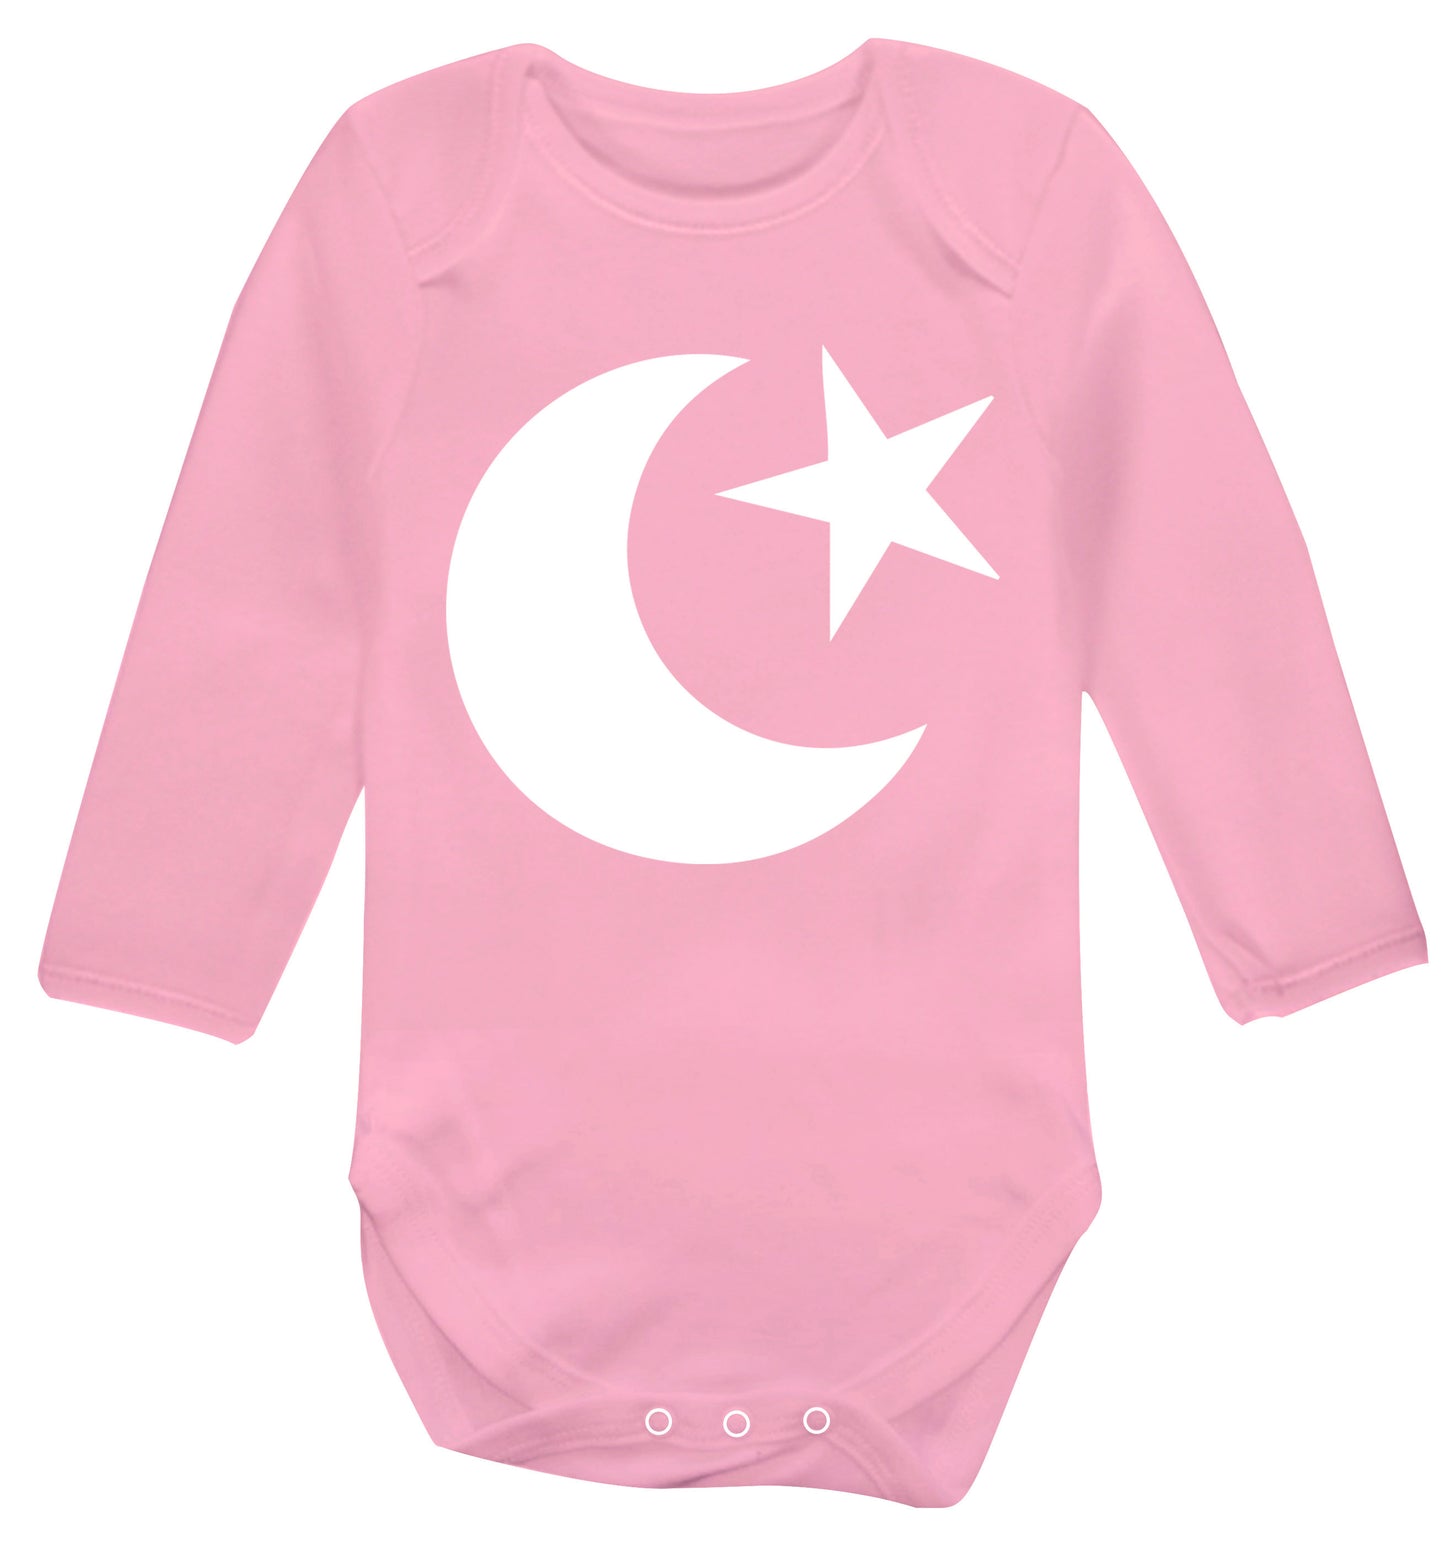 Eid Symbol Baby Vest long sleeved pale pink 6-12 months